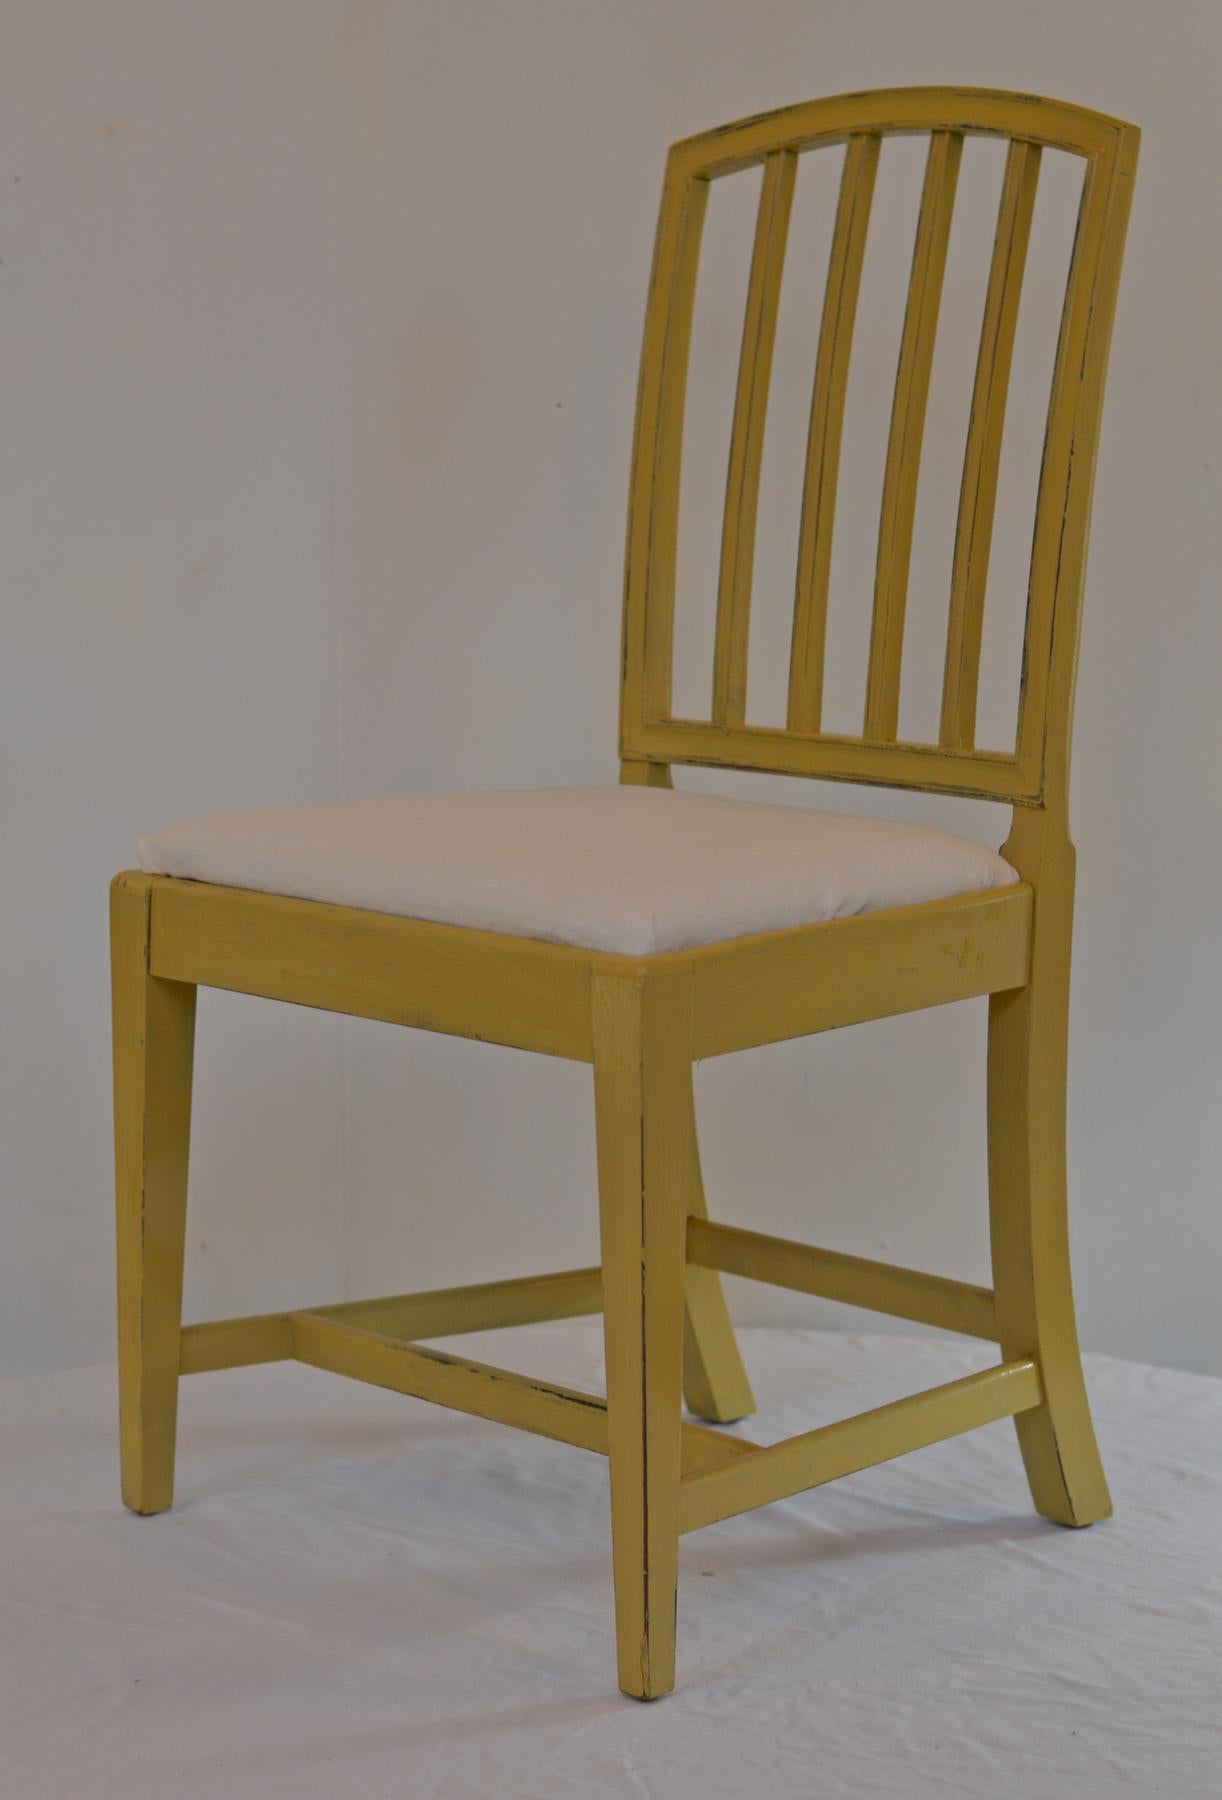 English Country House Hepplewhite Chairs in Churlish Green, Set of 6 6